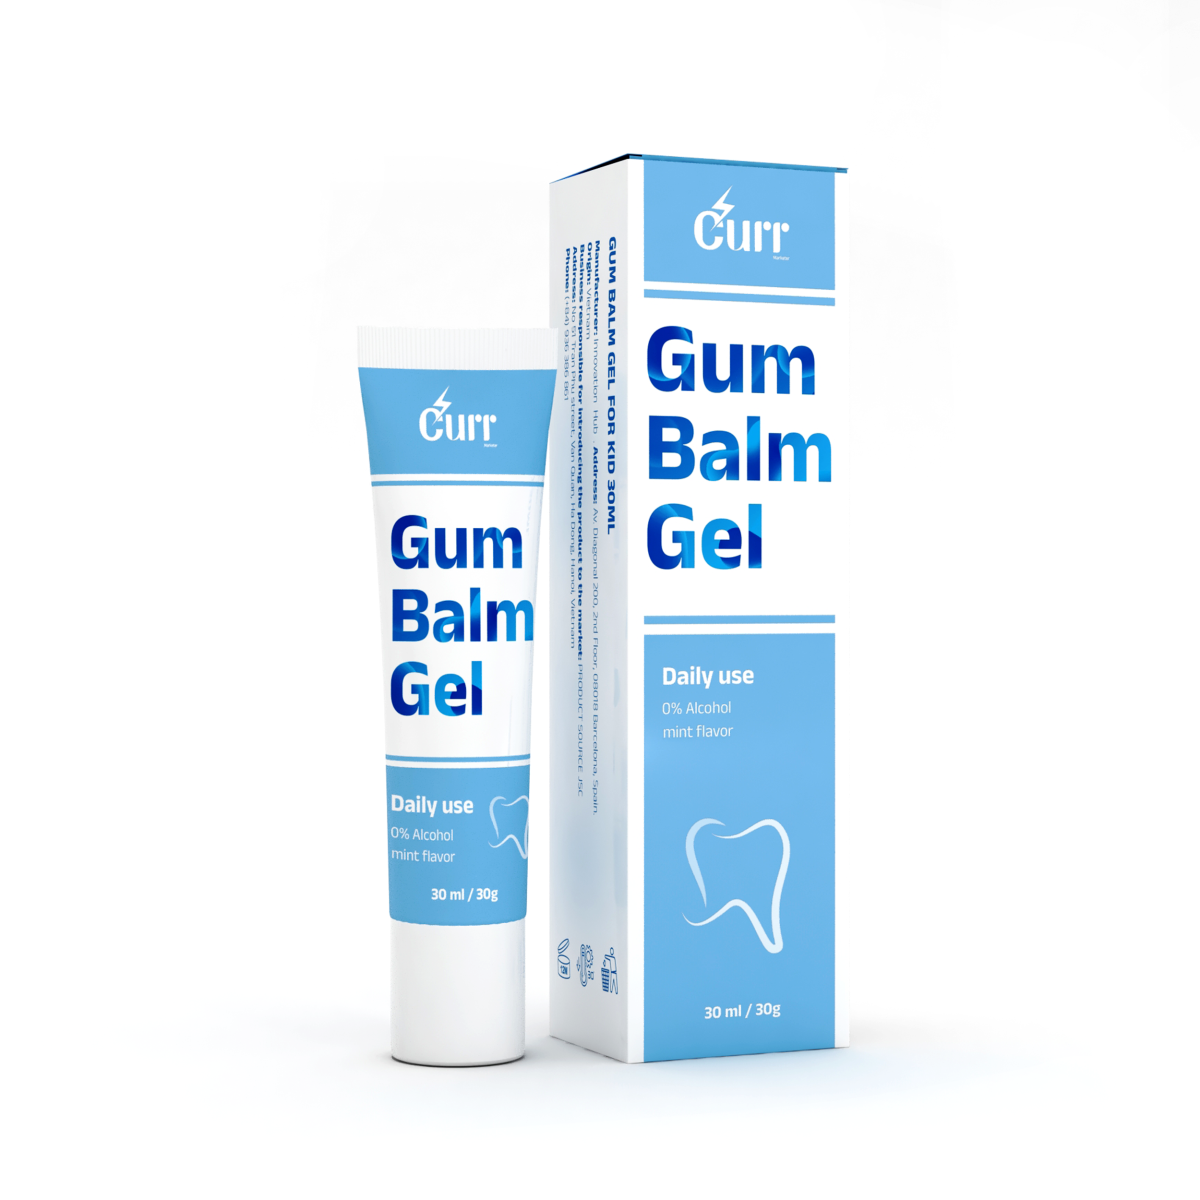 Gum Balm Gel - Daily